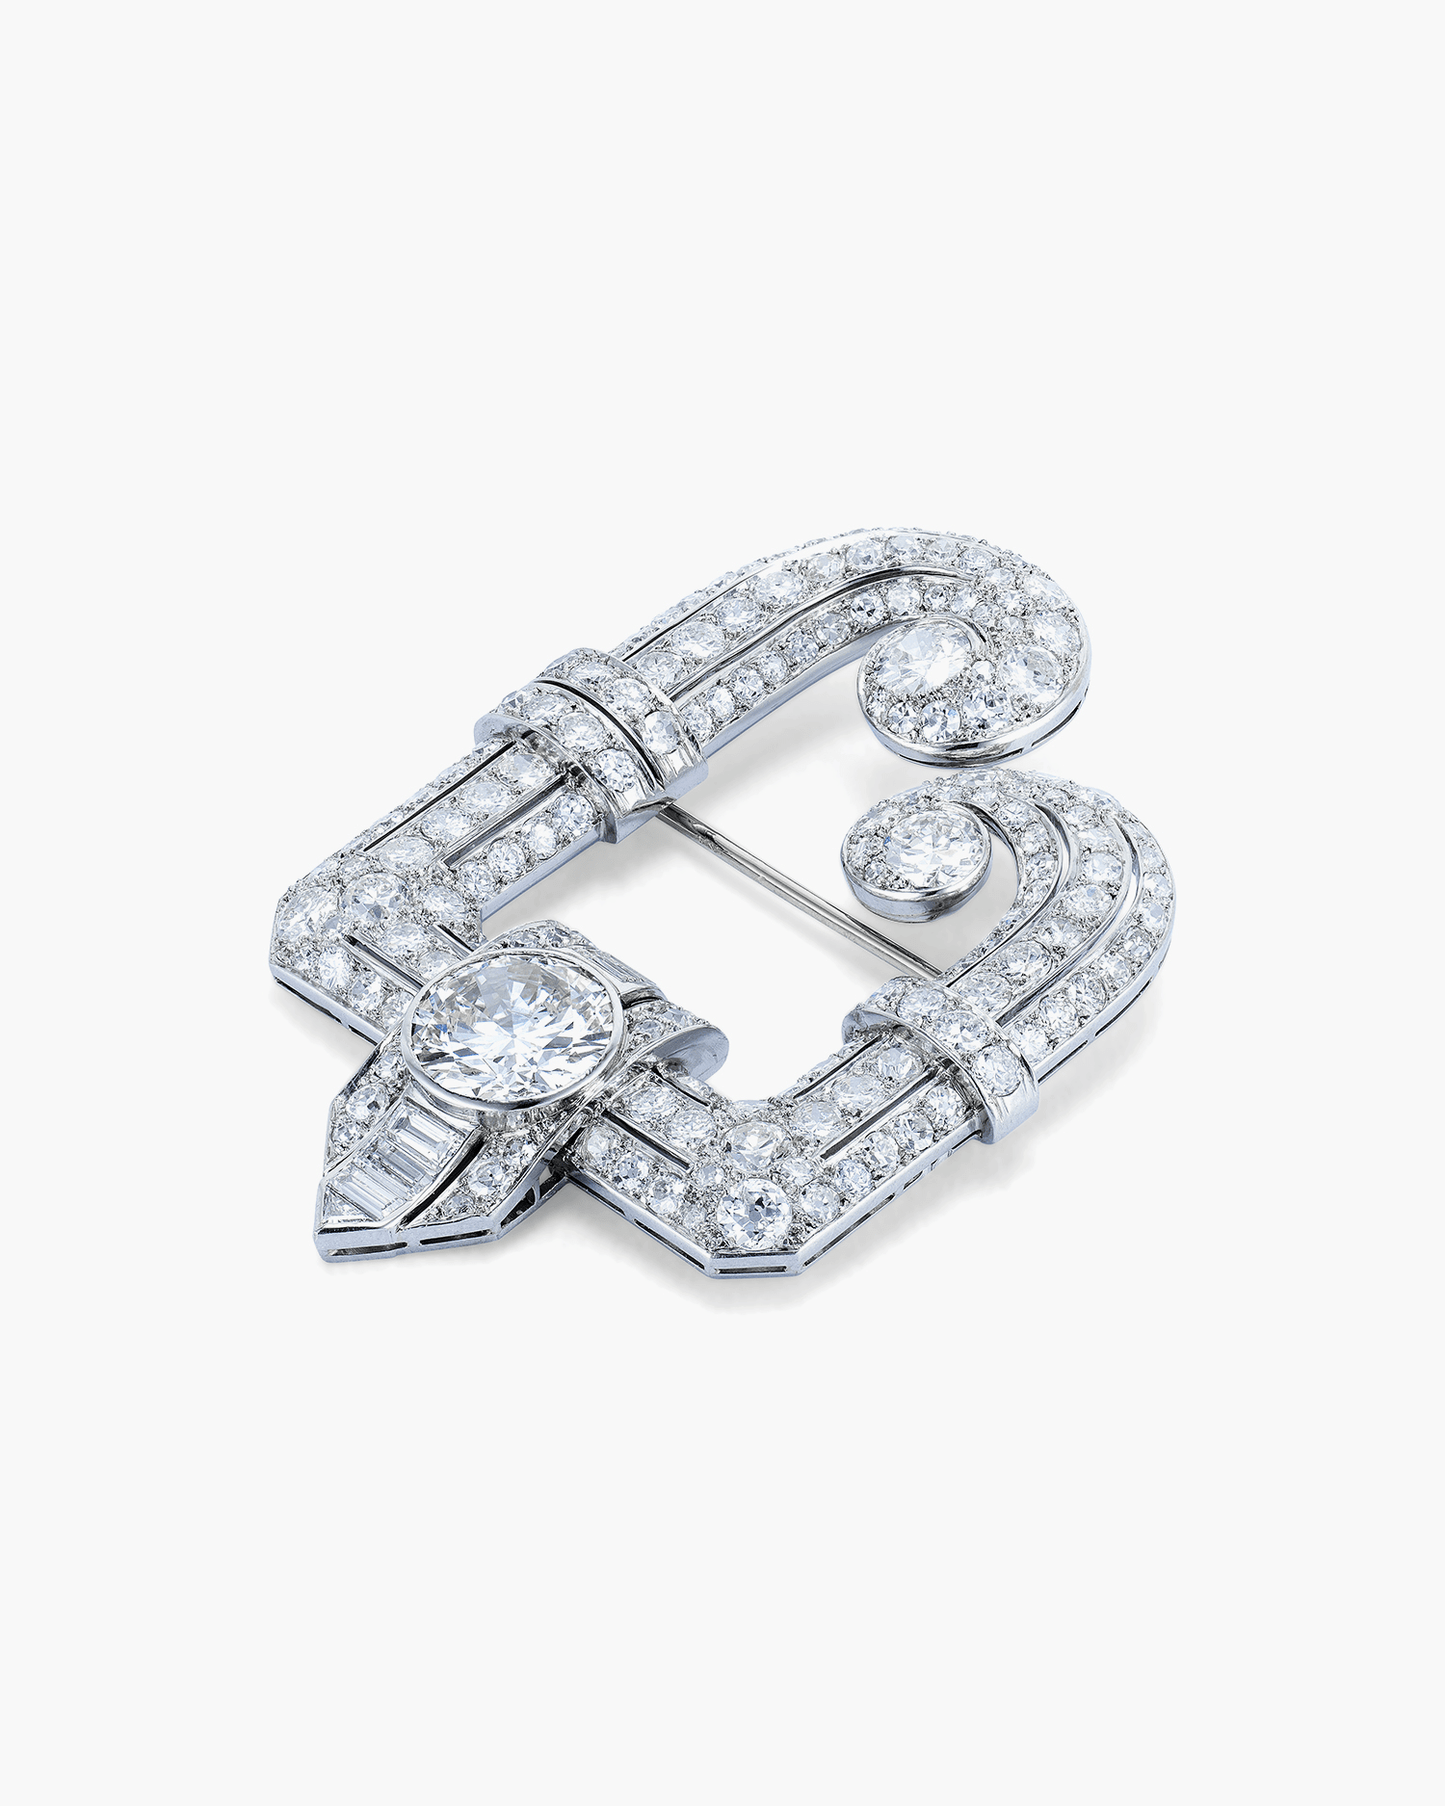 Art Deco Diamond Brooch by Maynier & Pinçon